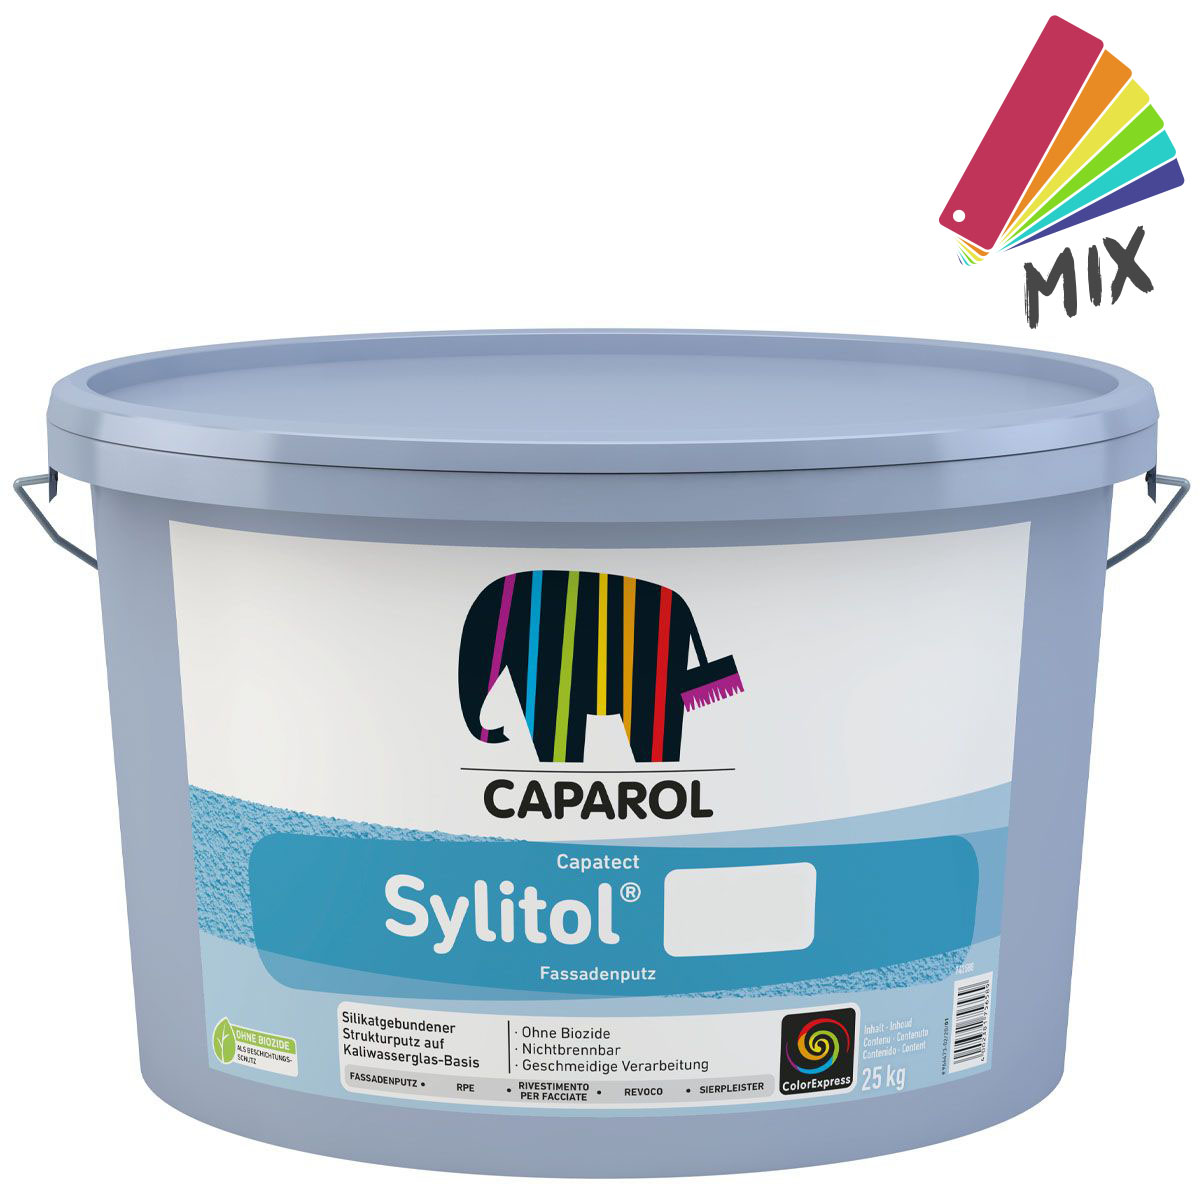 Caparol Capatect Sylitol Fassadenputz R20 (2mm) 25kg, MIX